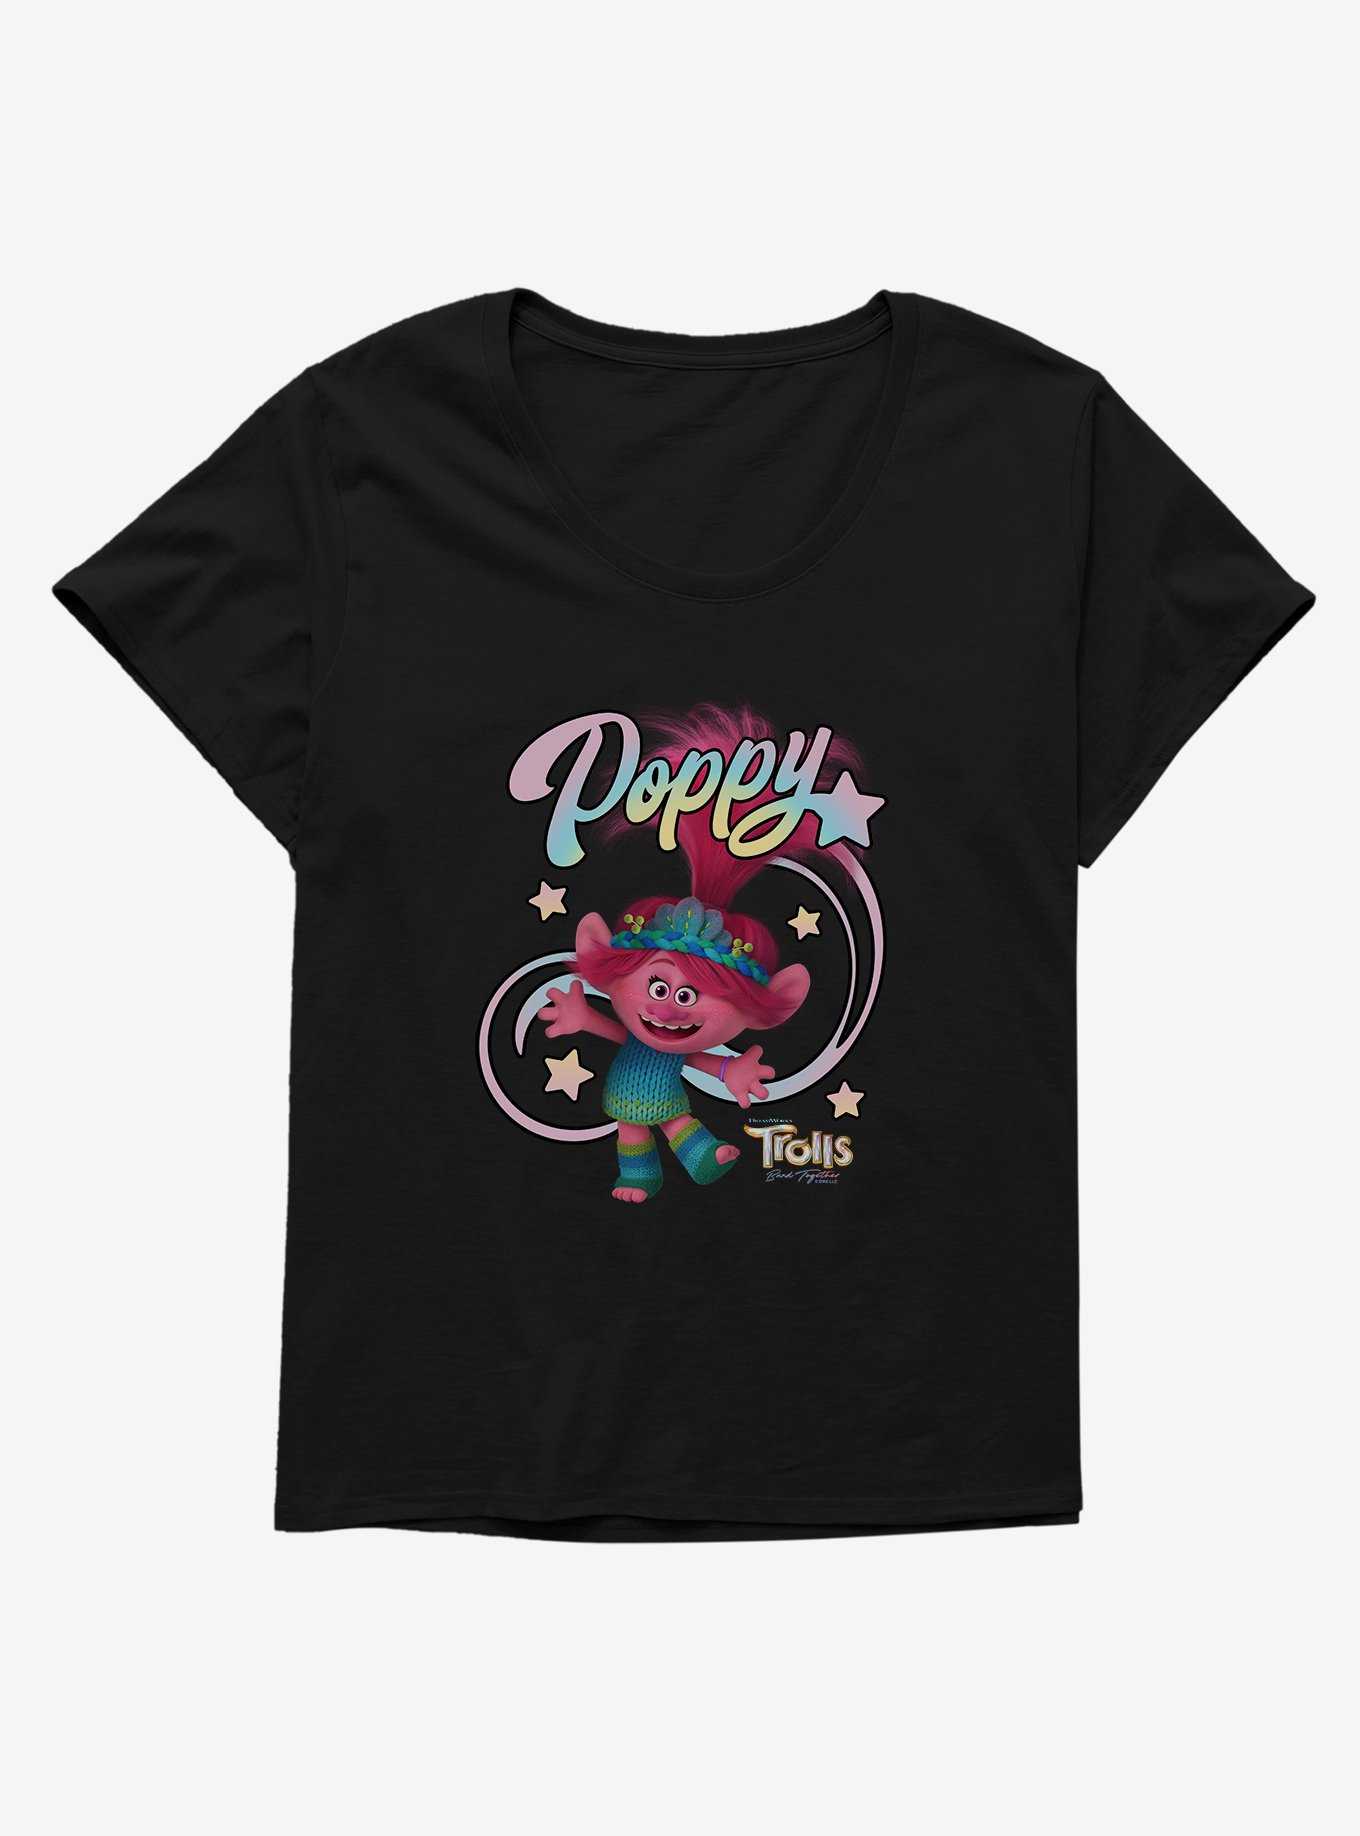 Trolls 3 Band Together Poppy Girls T-Shirt Plus Size, , hi-res